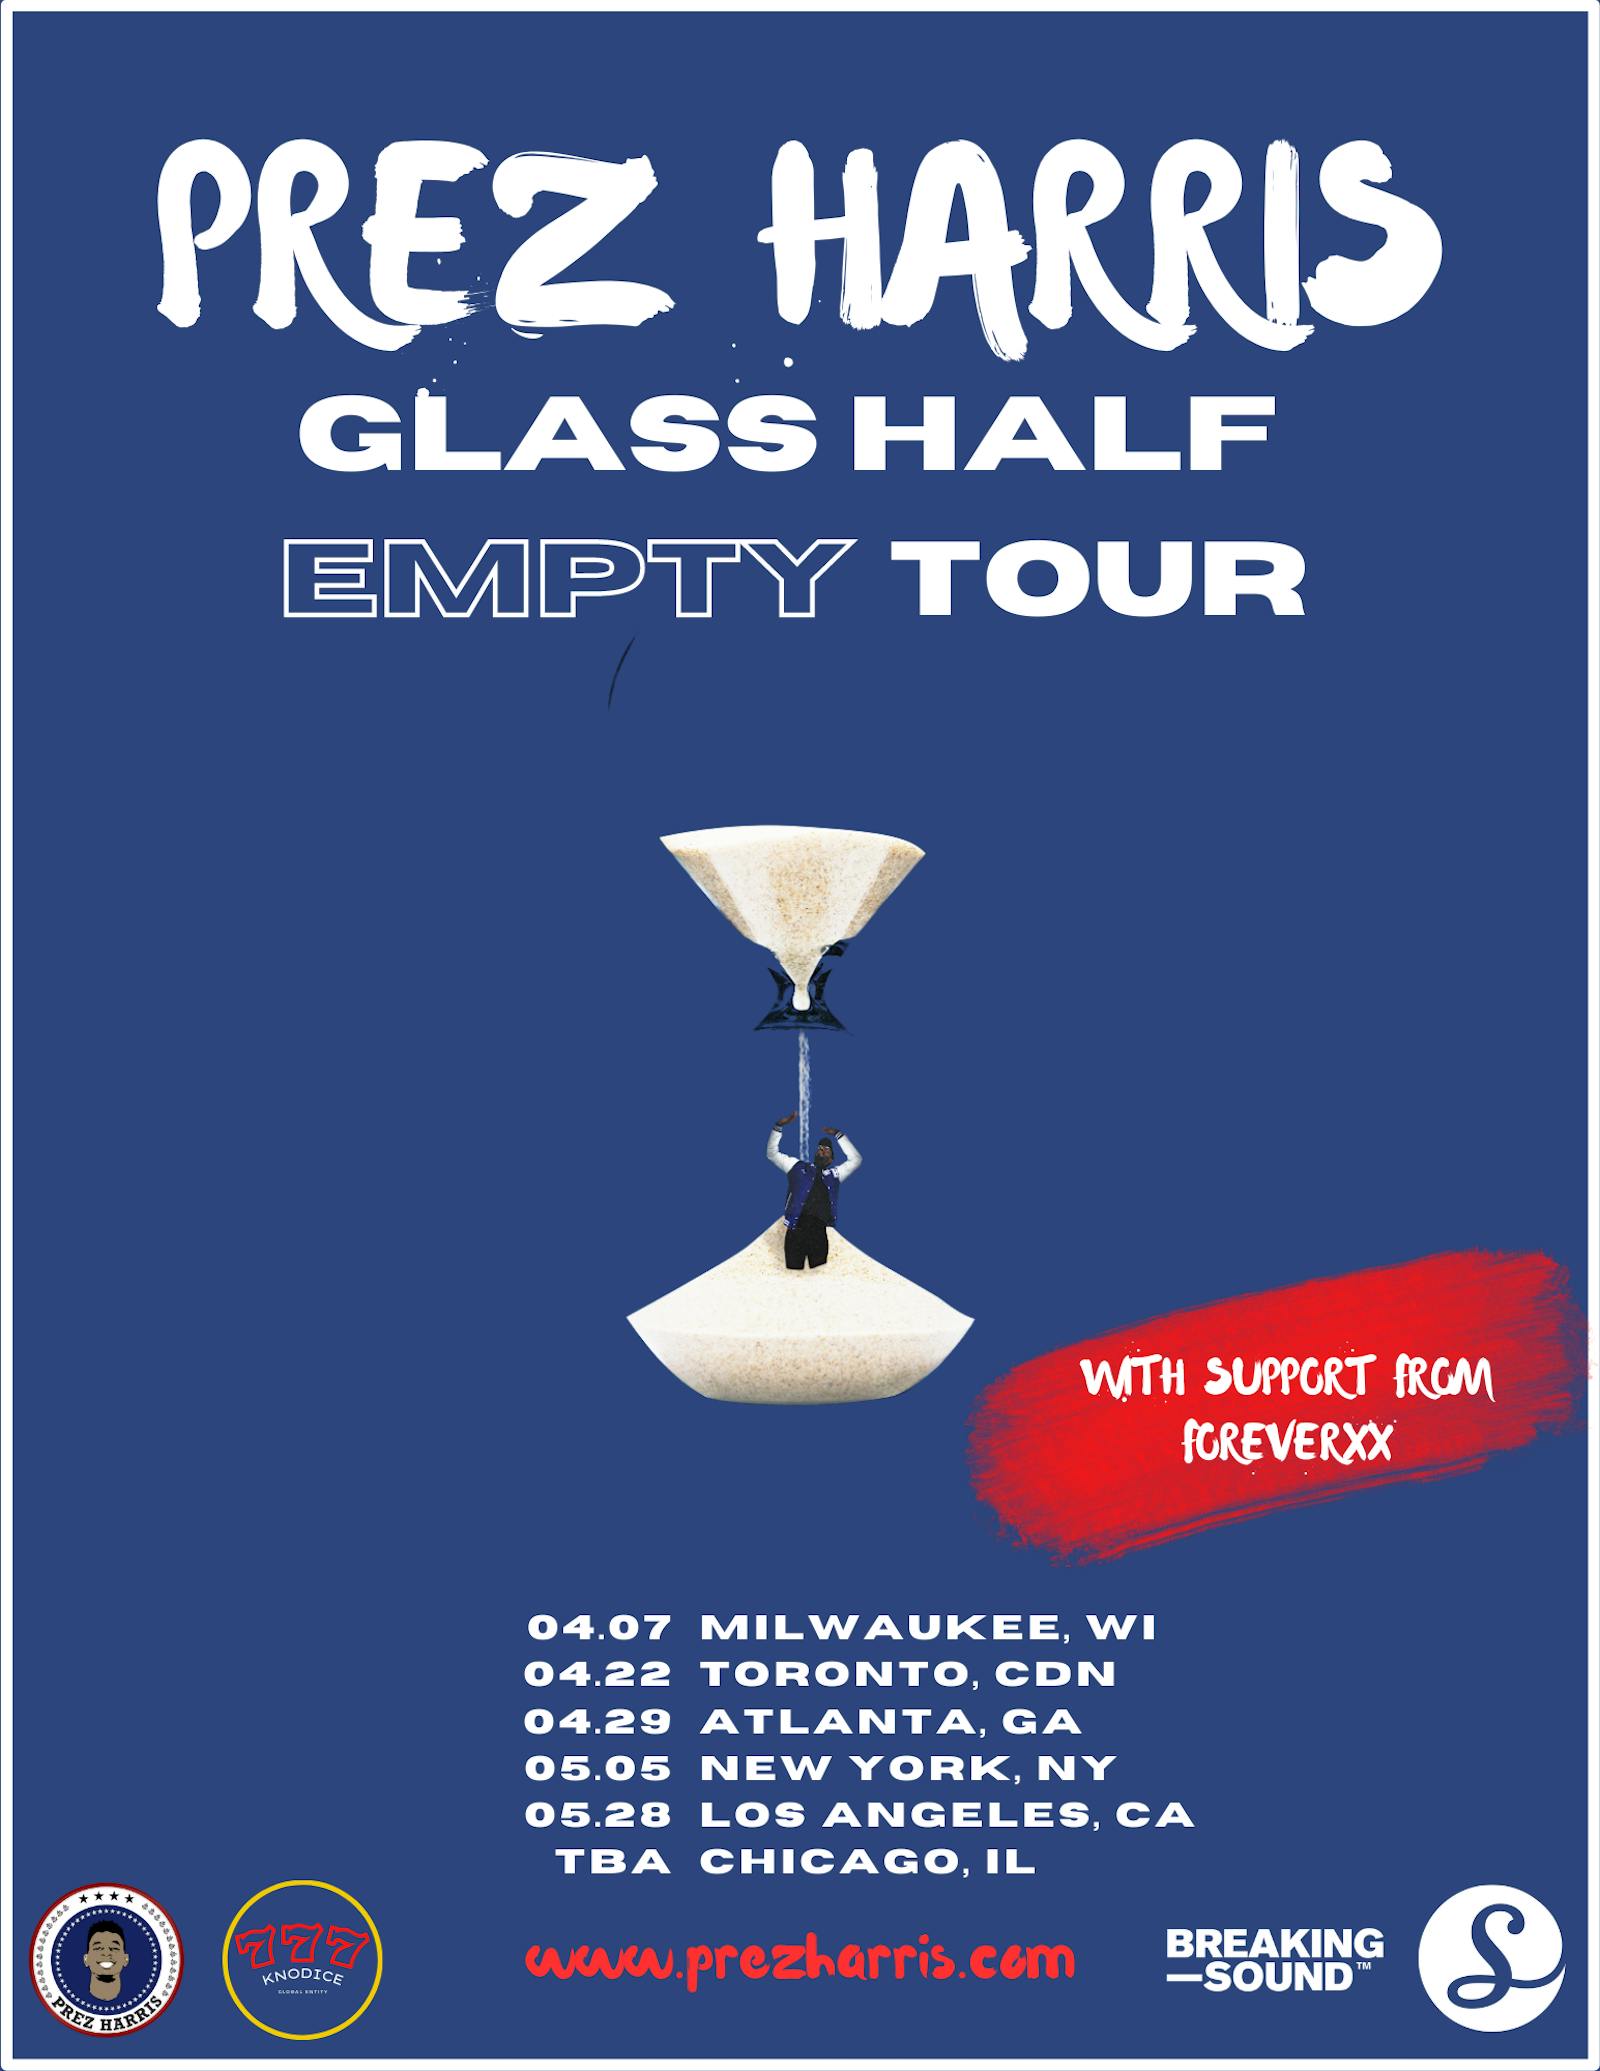 GLASS HALF EMPTY TOUR TICKETS